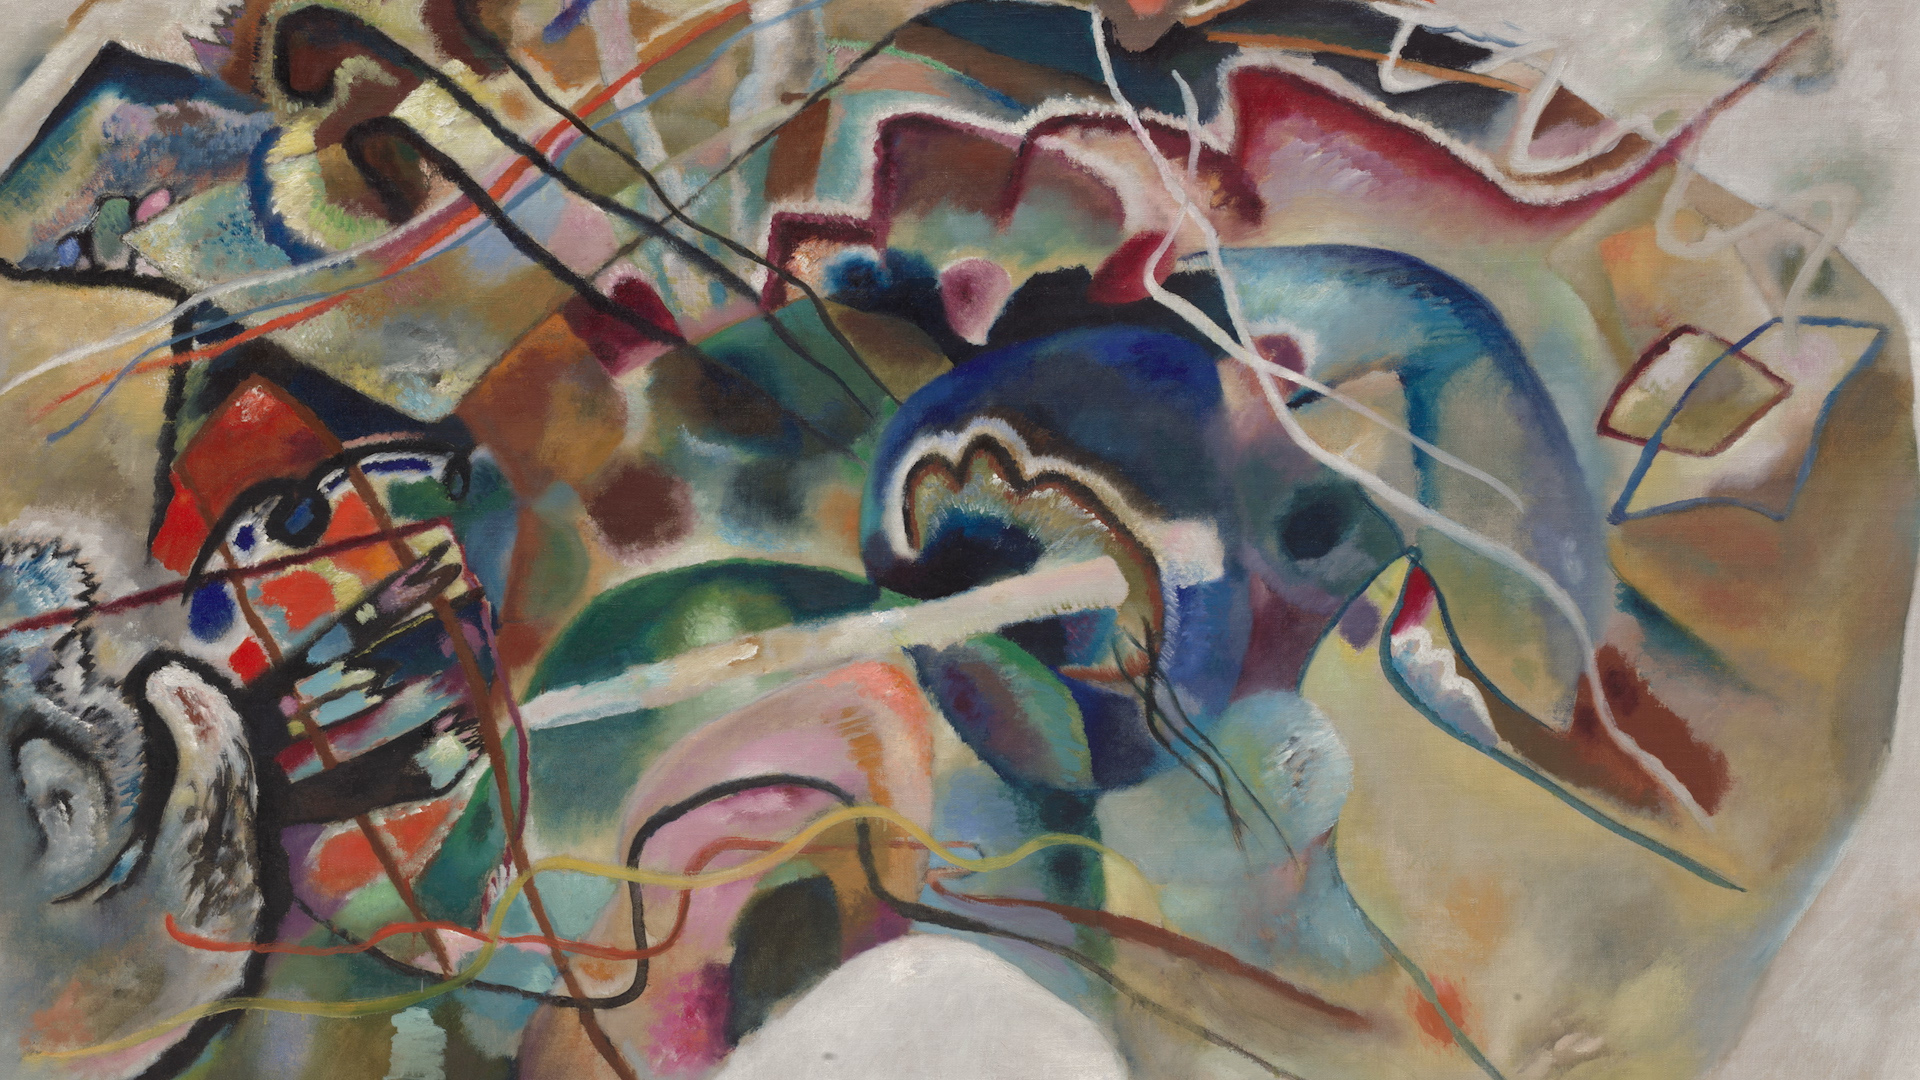 Vasily Kandinsky: Around the Circle” | The Guggenheim Museums and Foundation